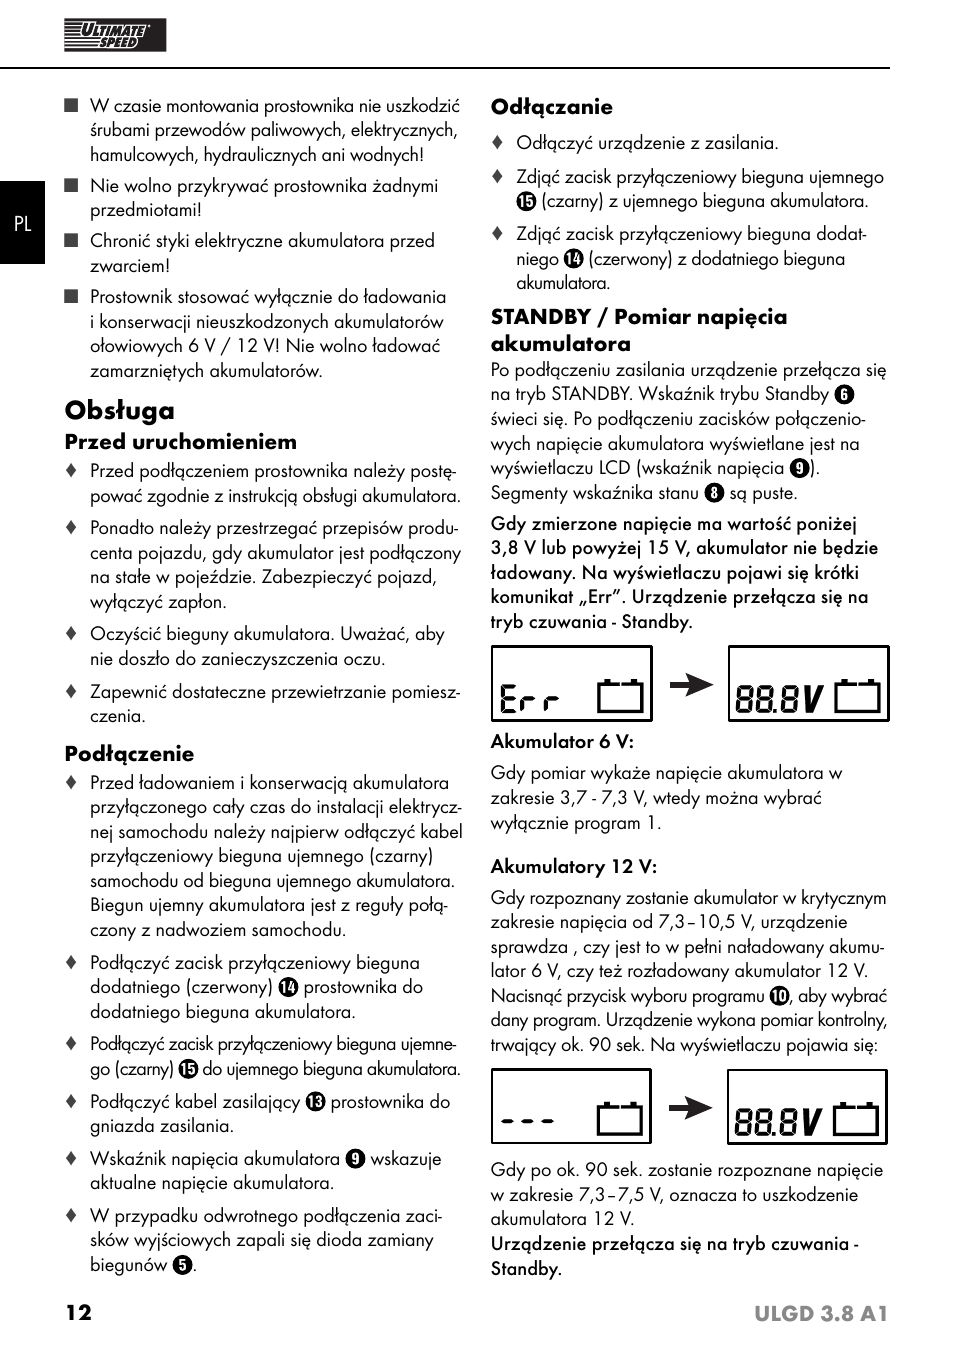 Obsługa | Ultimate Speed ULGD 3.8 A1 User Manual | Page 15 / 51